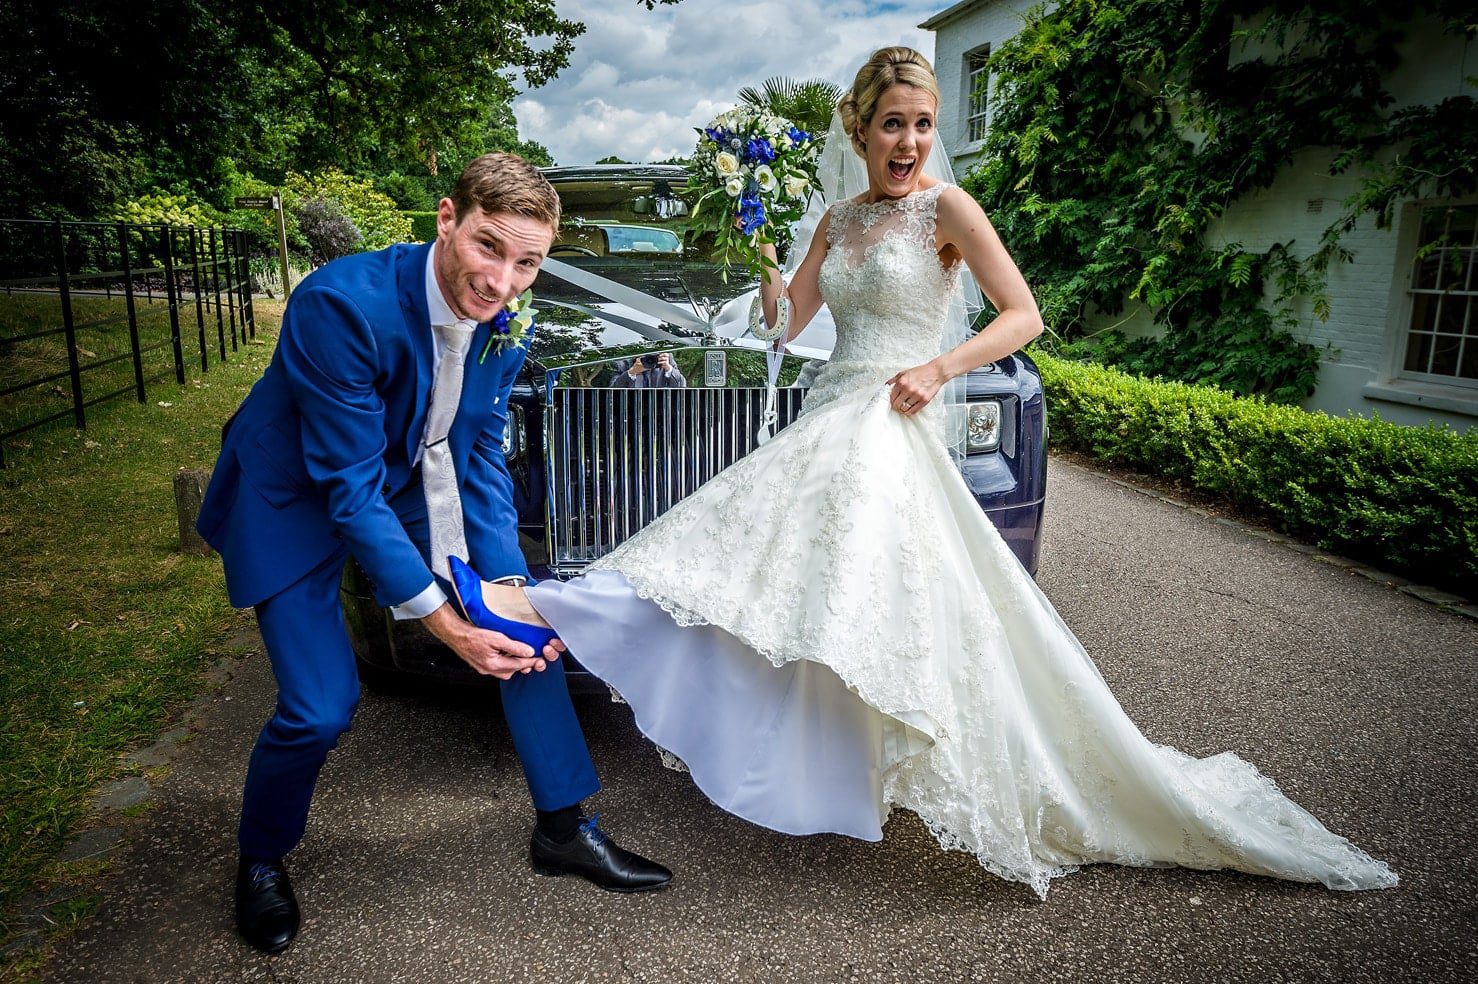 Groom Holding Bride's Foot at Wedding - Caerphilly Wedding Photographer